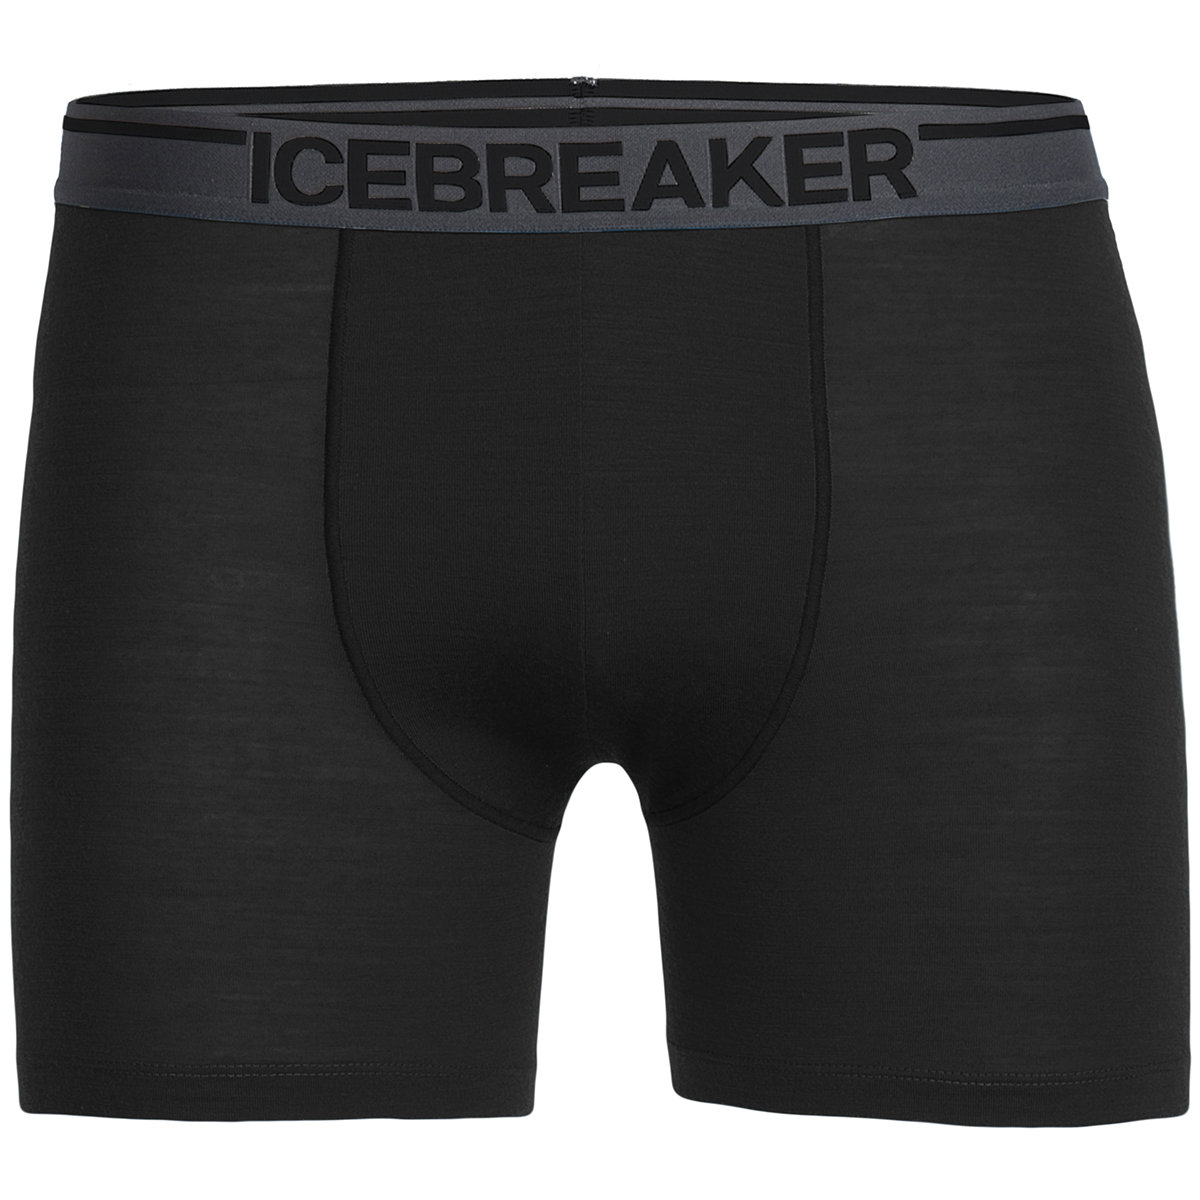 ICEBREAKER MENS ANATOMICA BOXERS BLACK 23 Latest Fashion | 41$ at ...